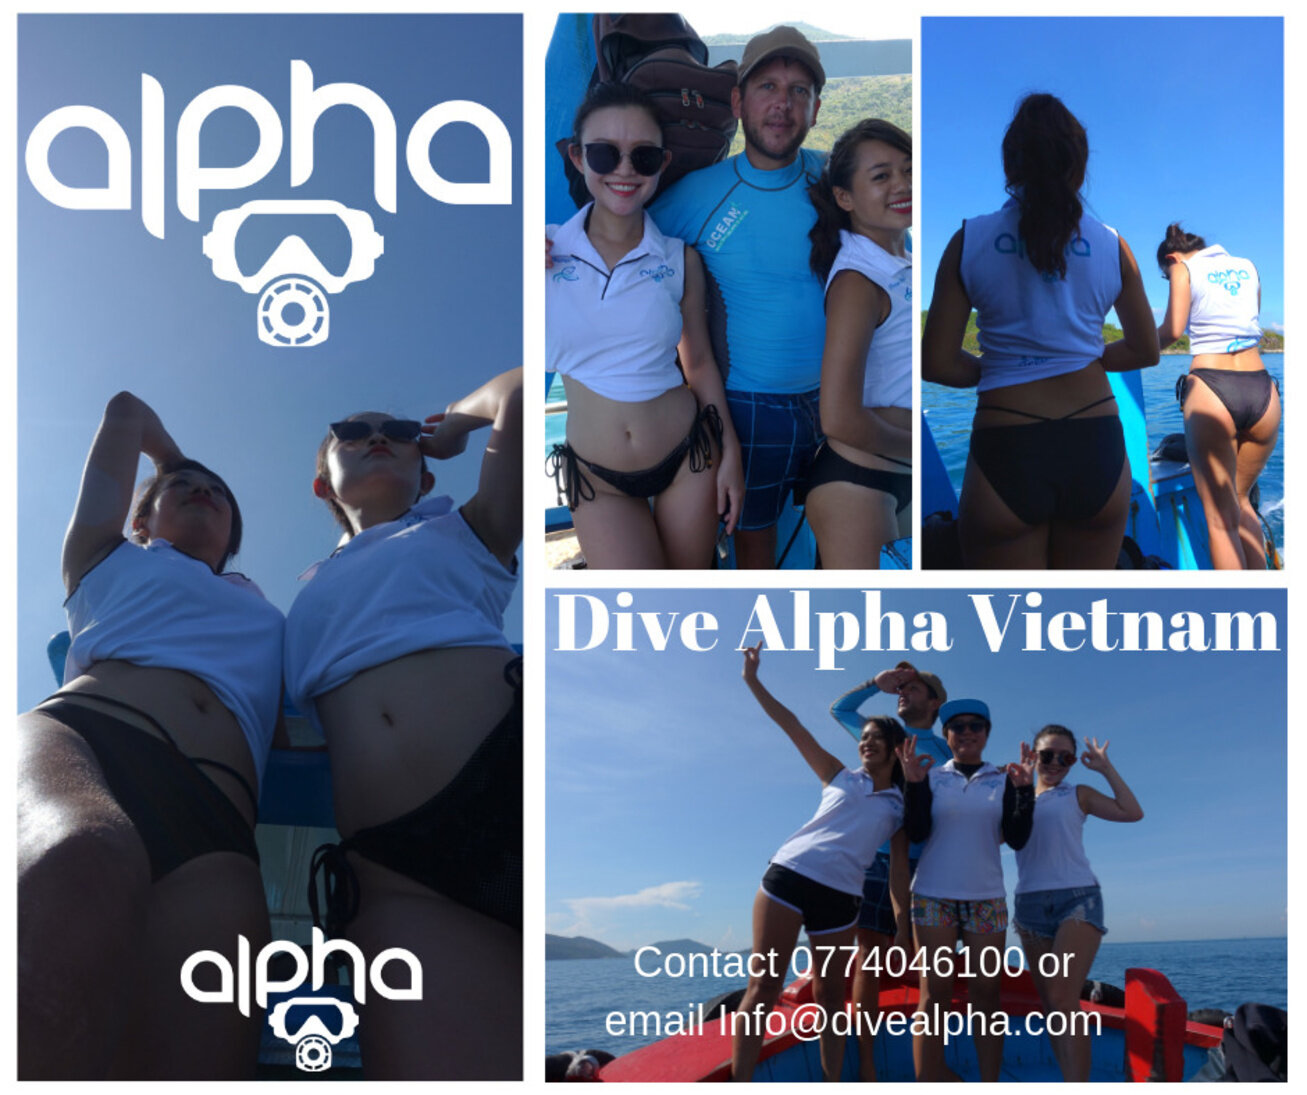 A great day on the boat #divealphaviietnam #Raid #courses #fun #nhatrang #vietnam #learnewskills